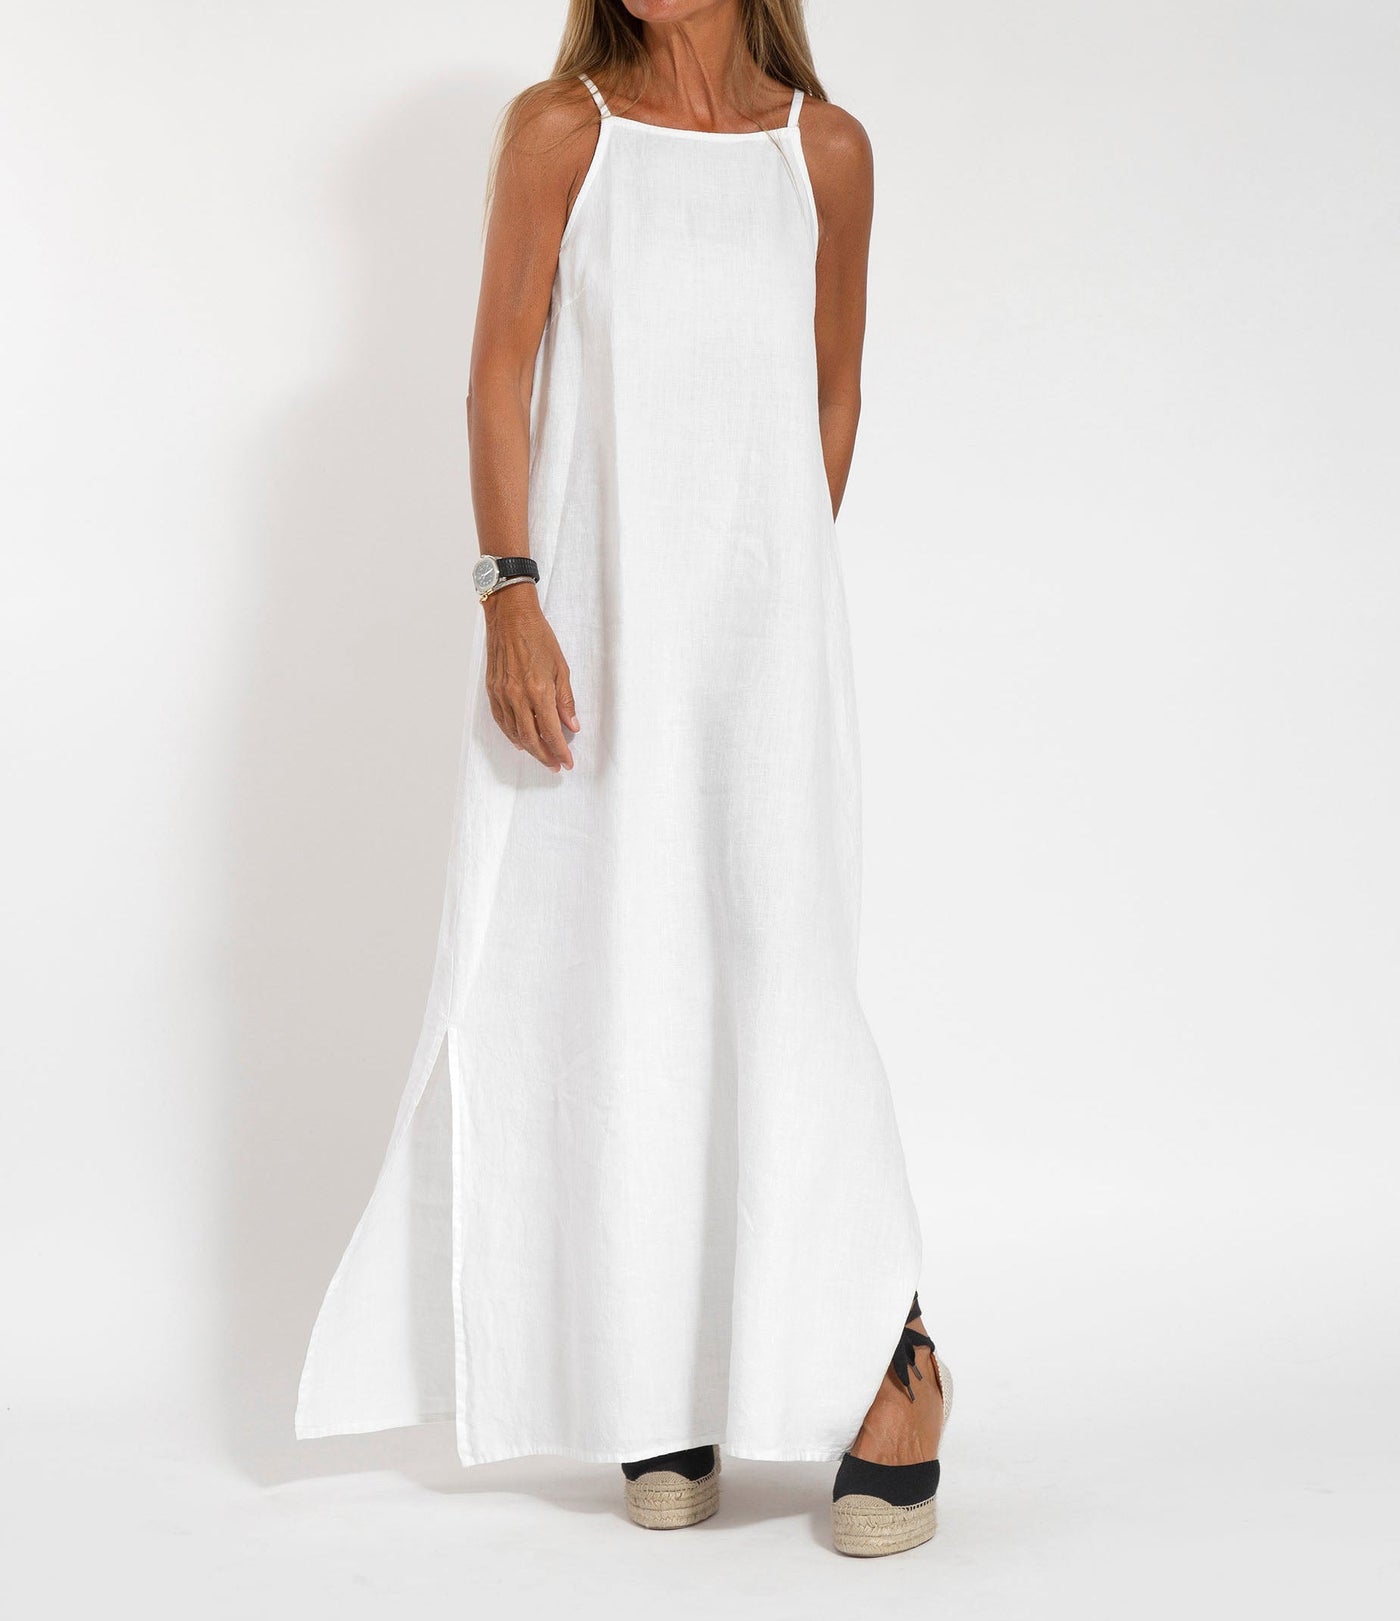 NTG Fad Elegant Solid Color Cotton Linen Sleeveless Long Dress